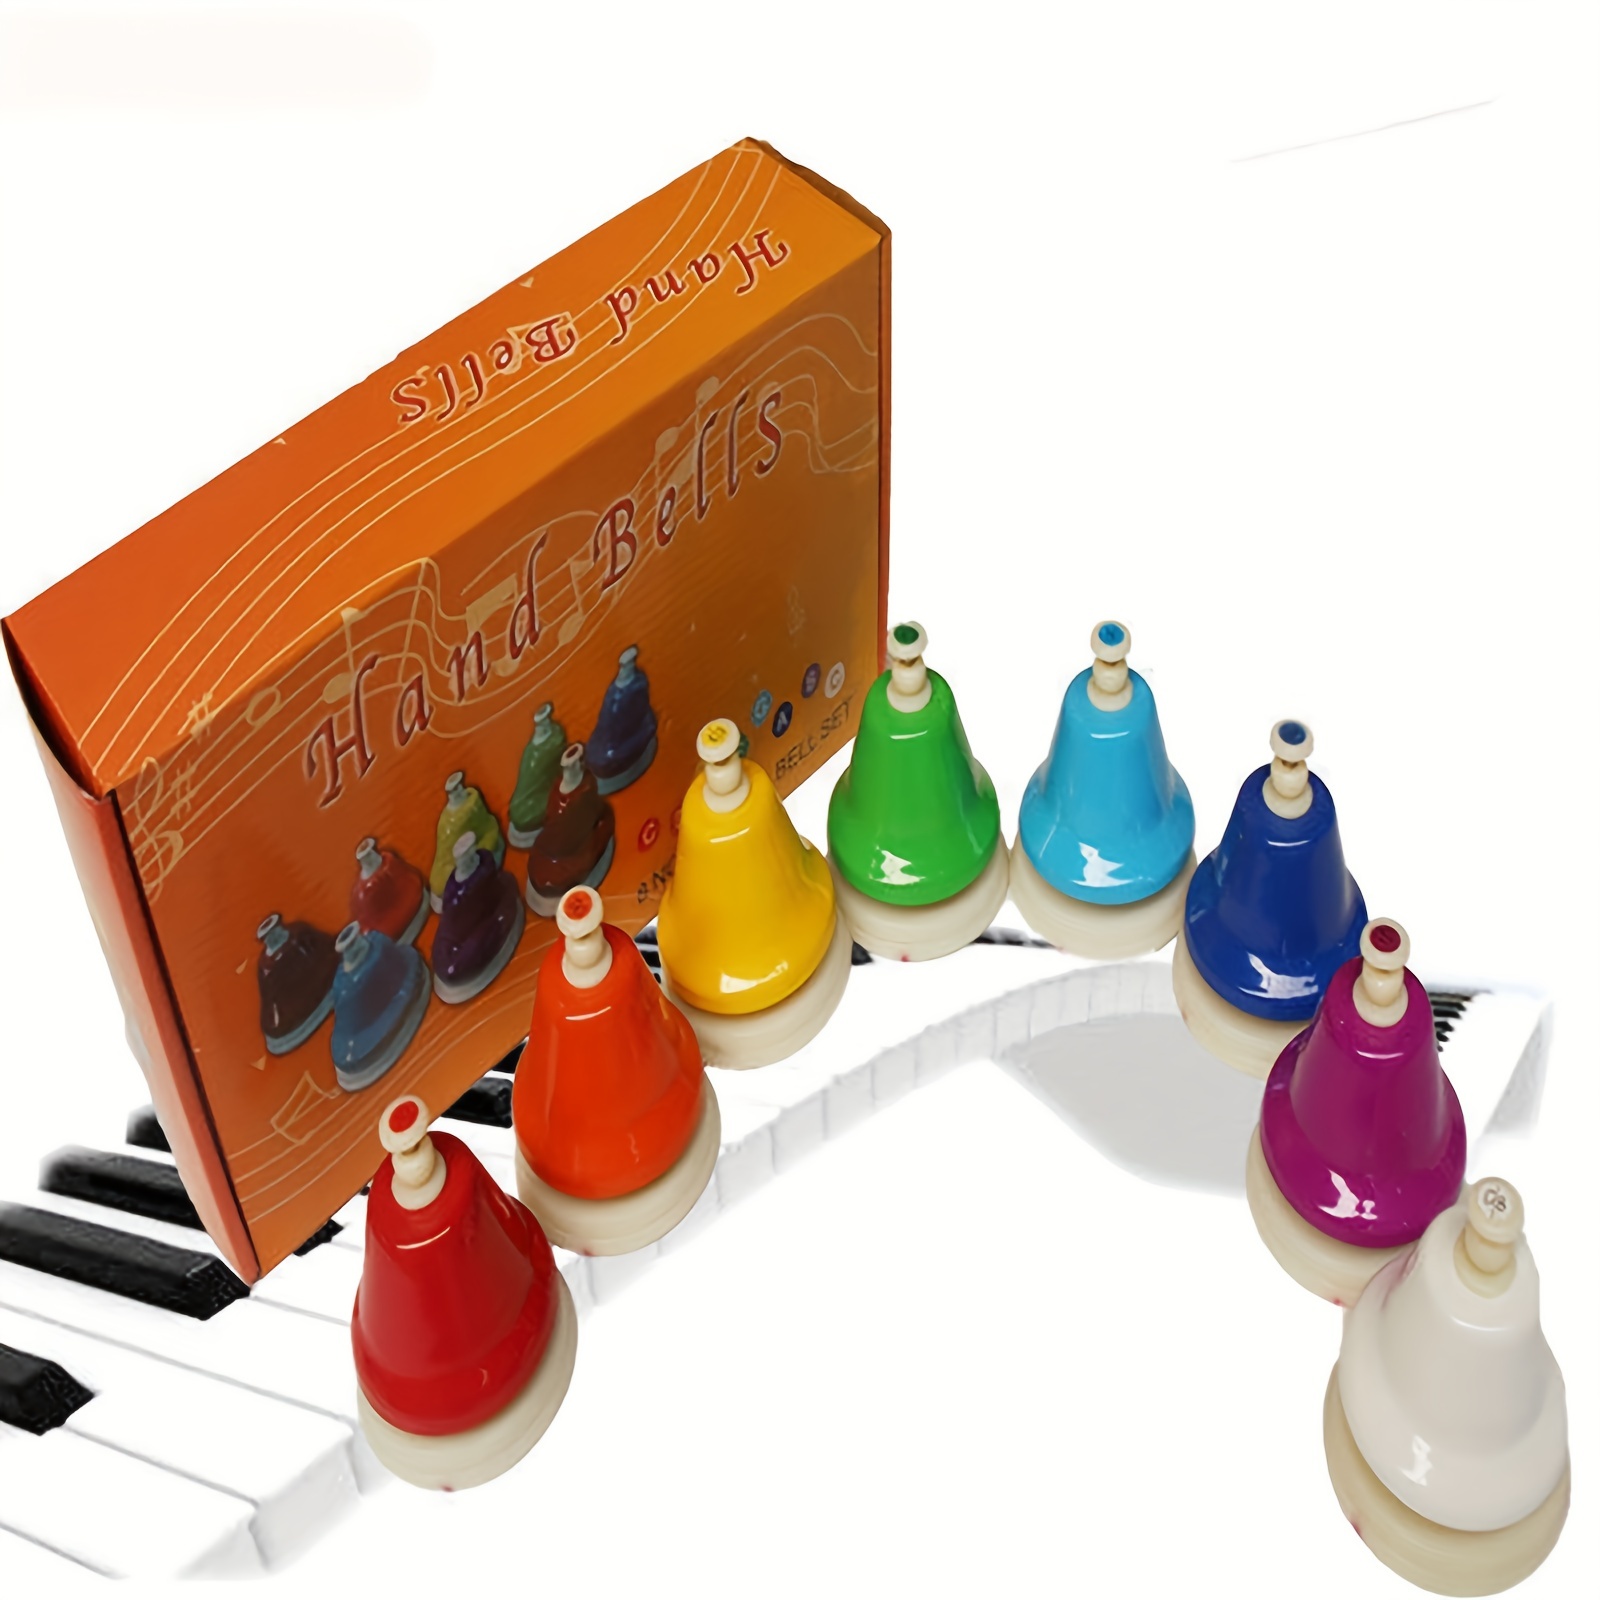 Hand Bells & Desk Bells - Classroom Instruments - Education